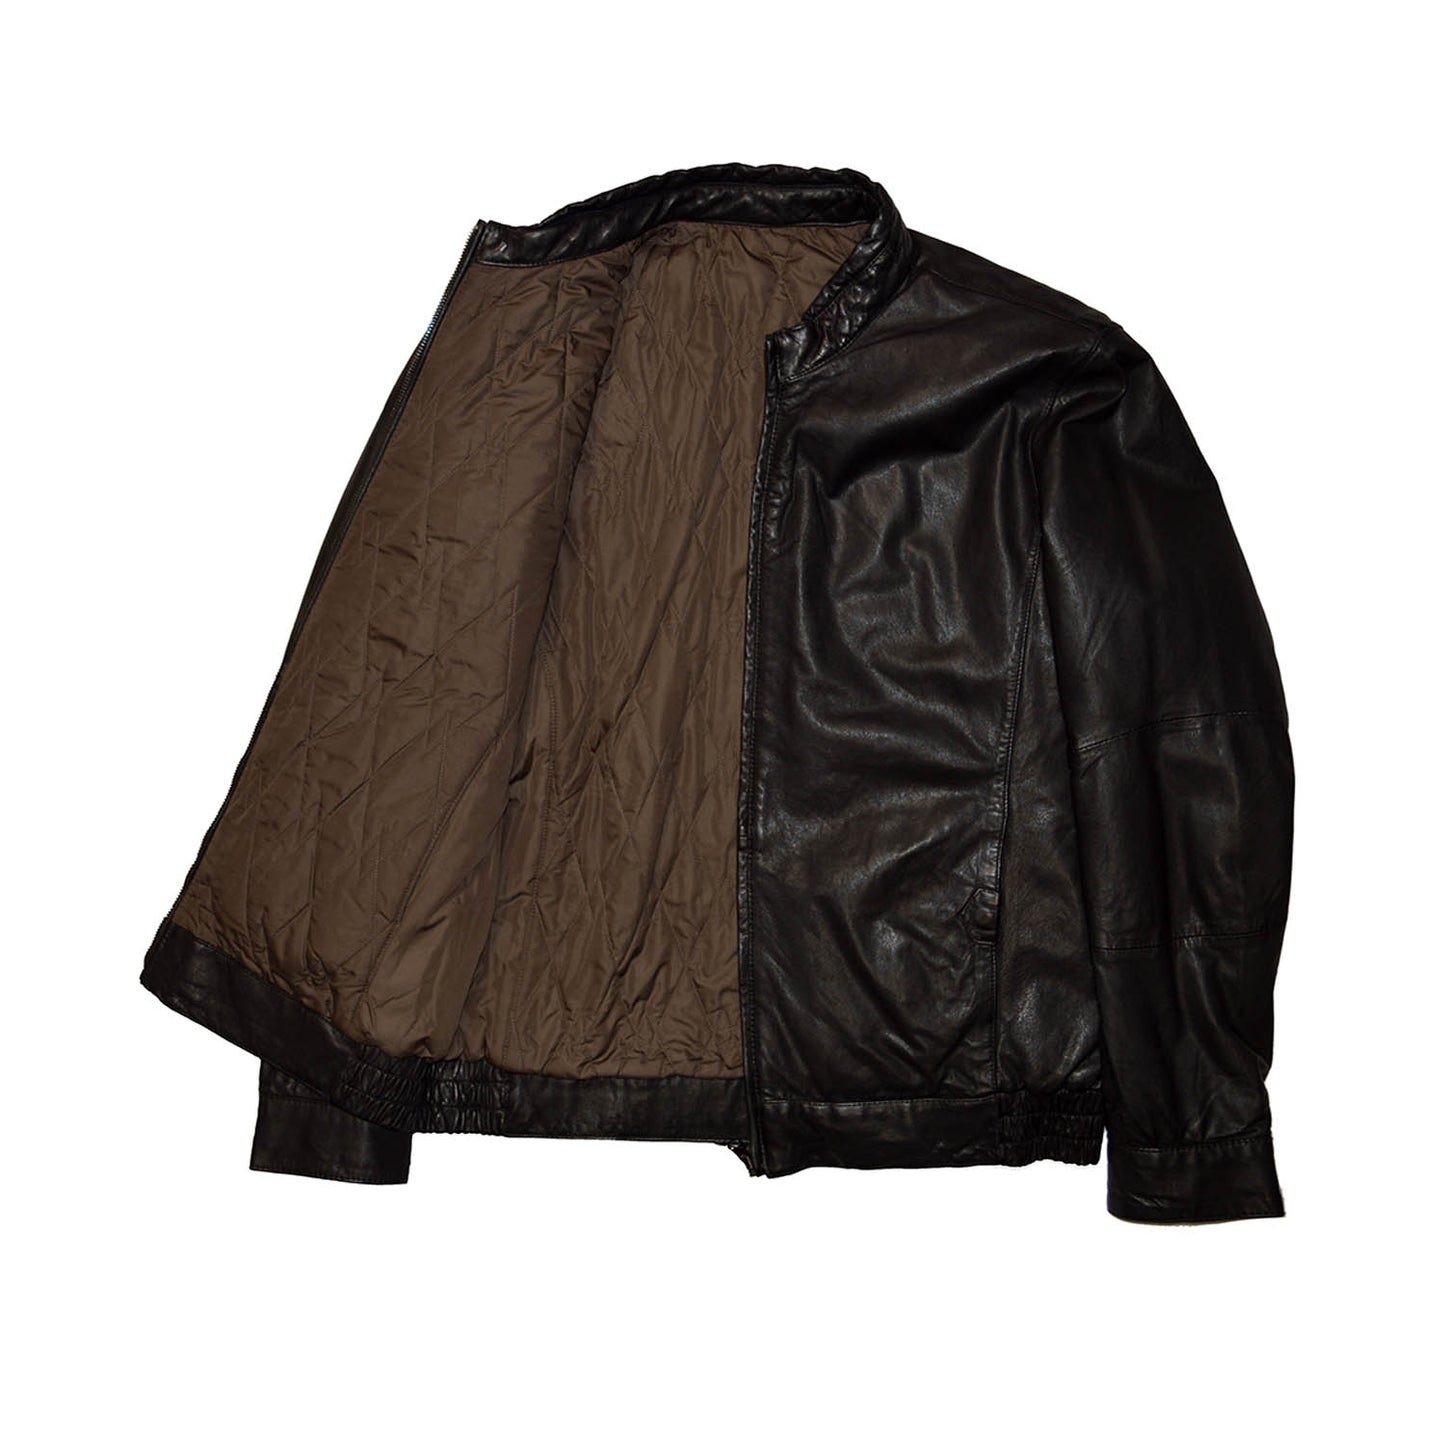 Torras Black Reversible Leather Jacket